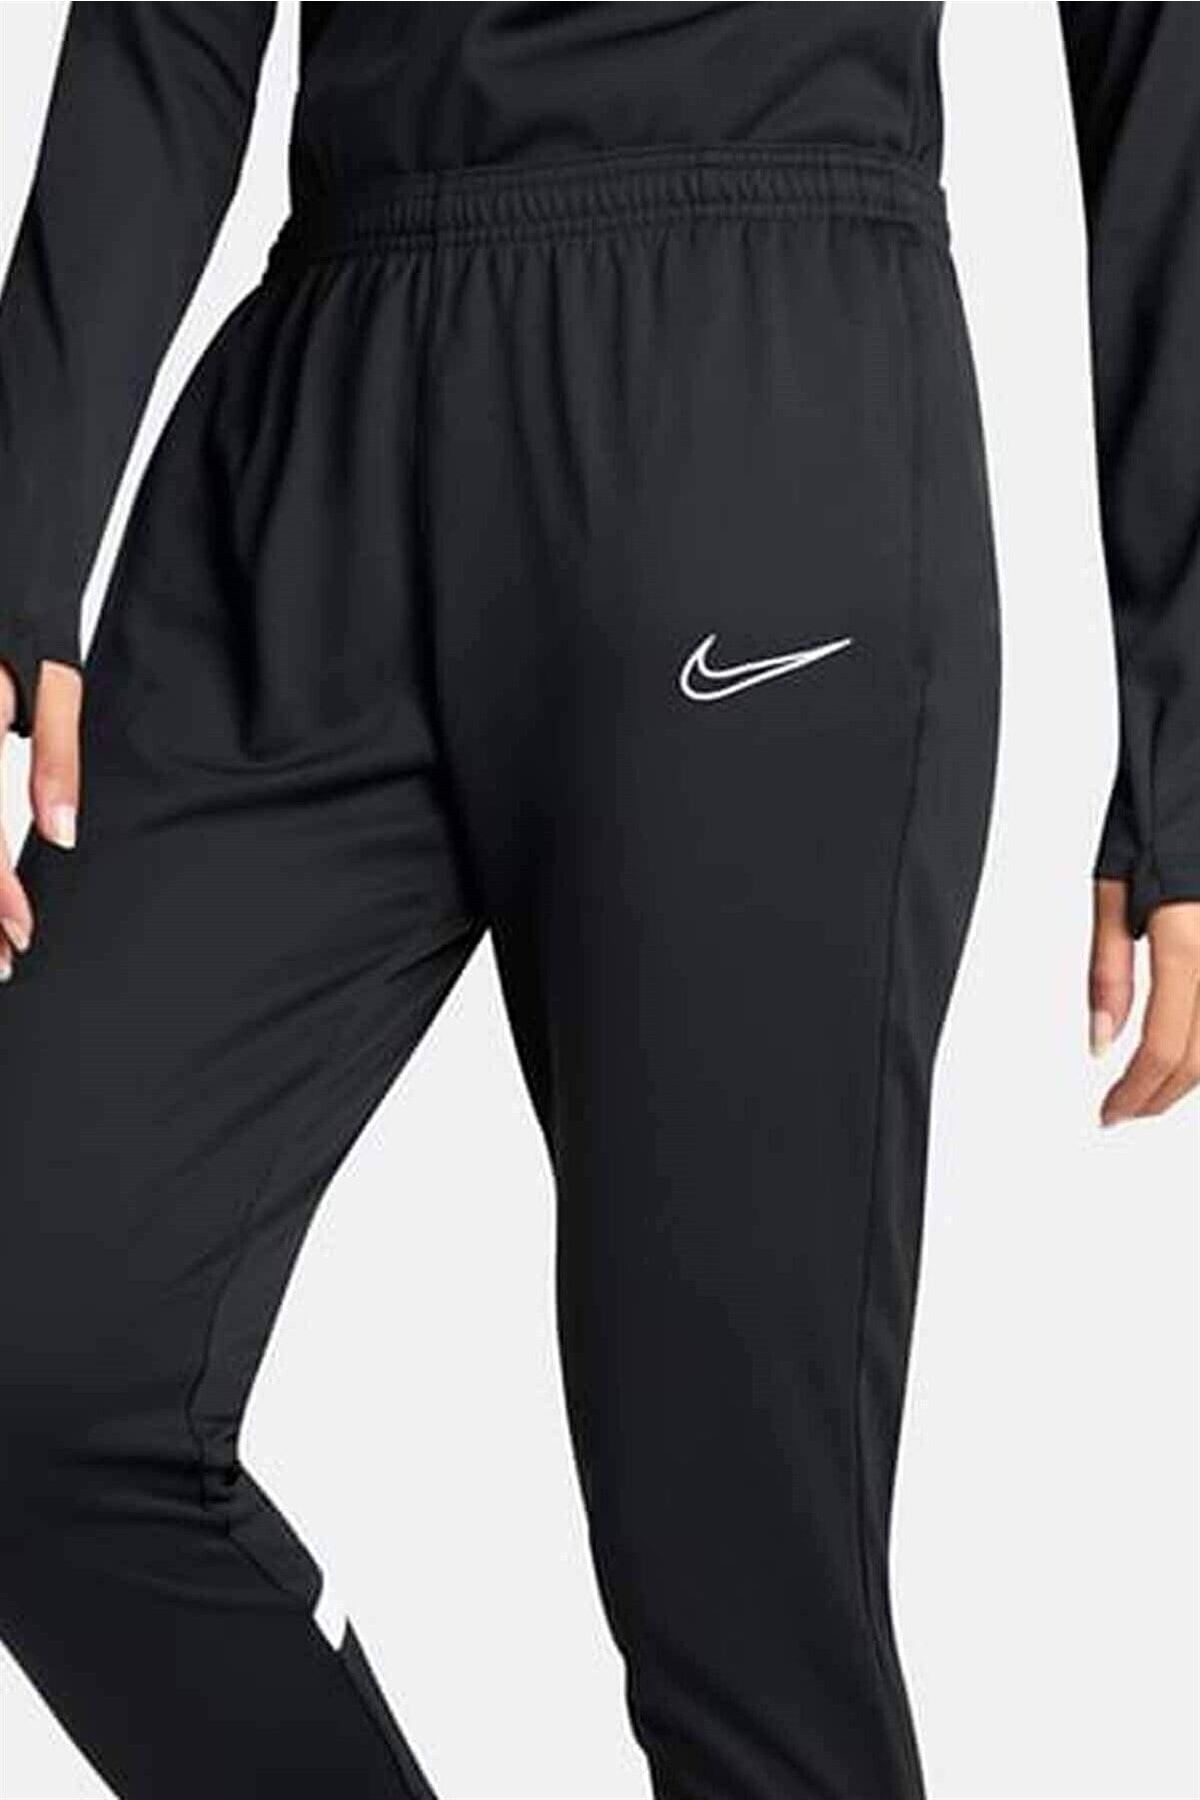 Nike W Dry Fit Academy Black Women's Sweatpants Cv2665-010 V1 - Trendyol